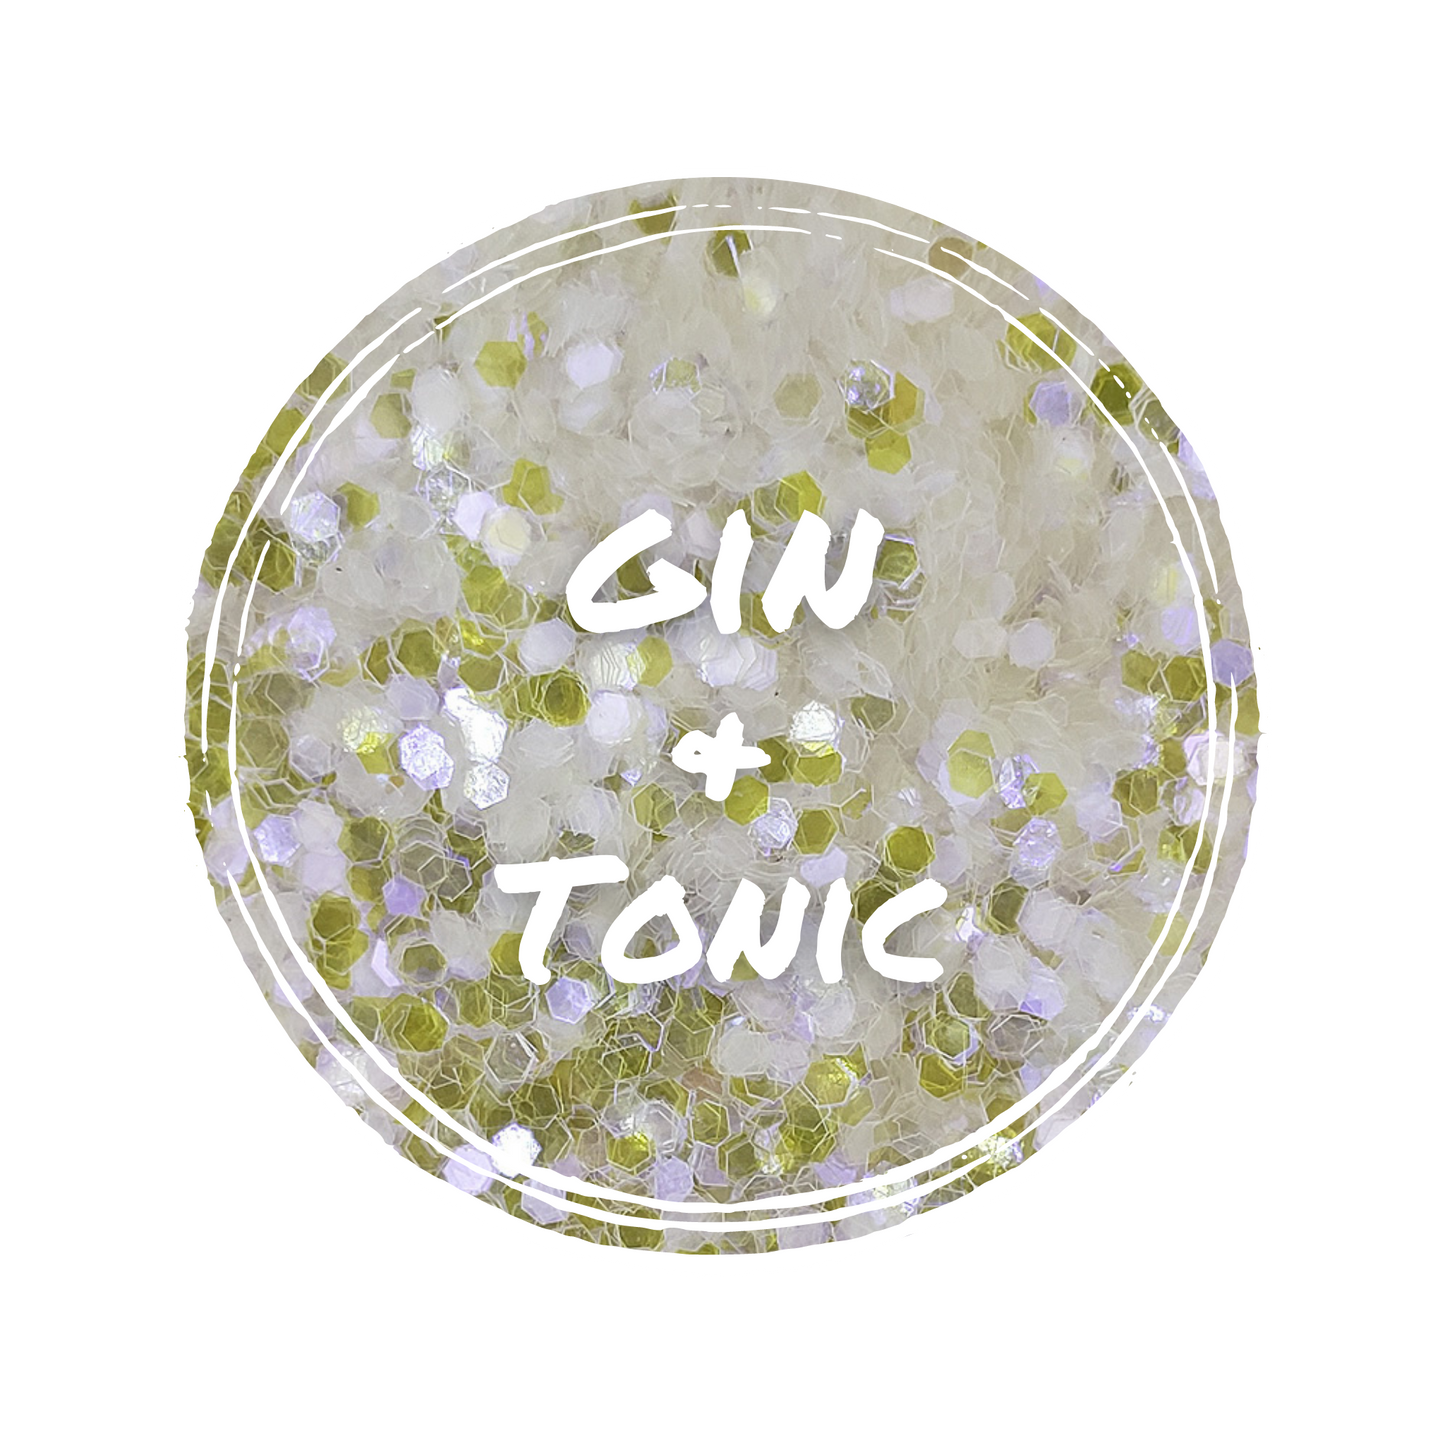 Gin + Tonic